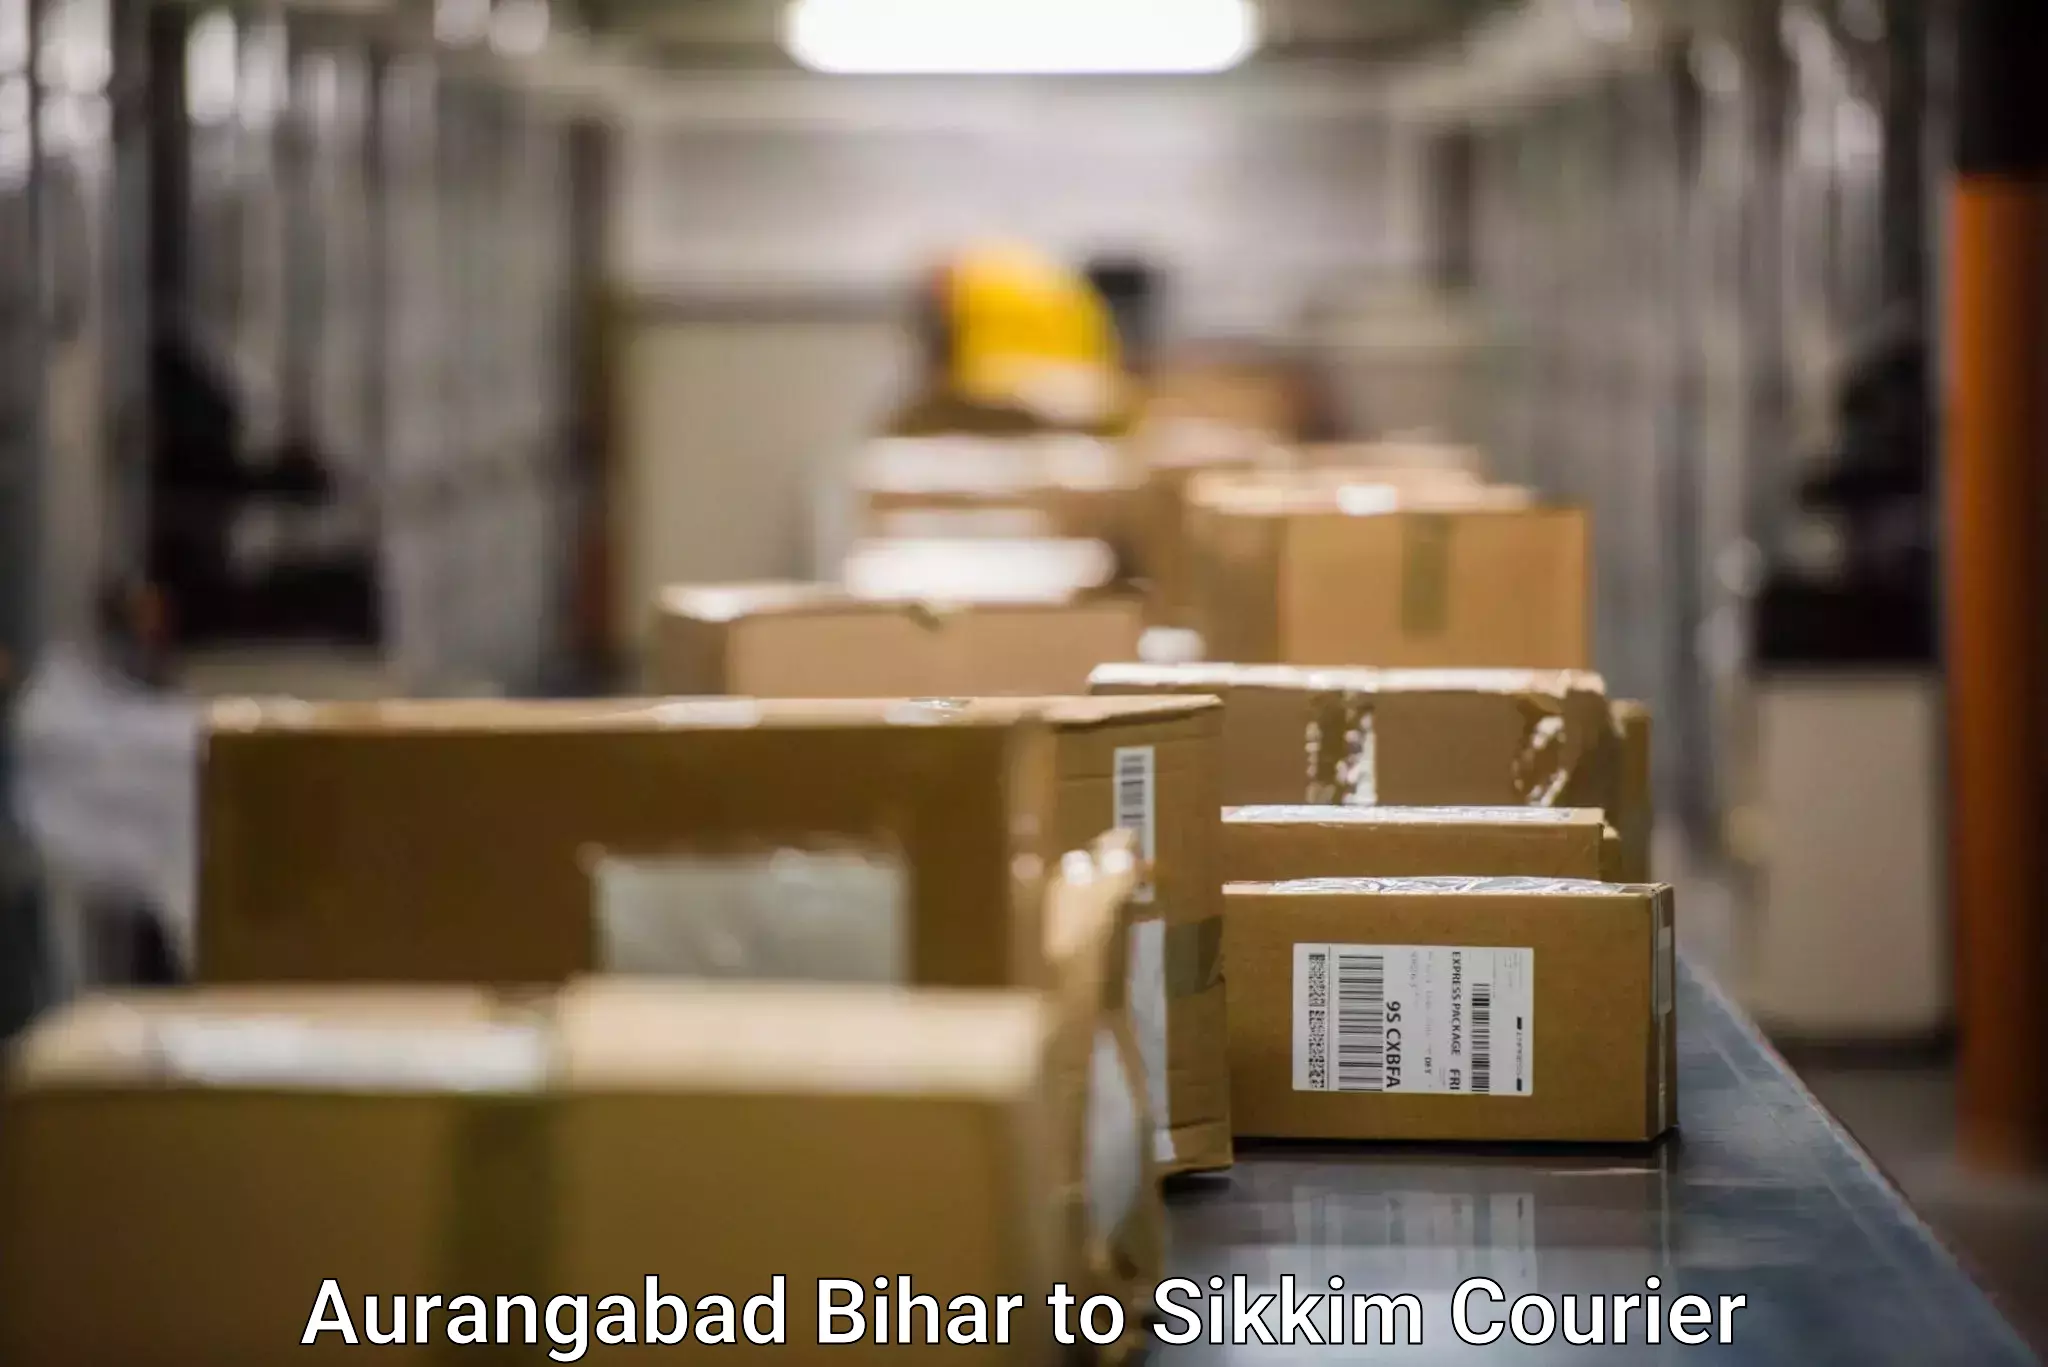 Speedy delivery service Aurangabad Bihar to Pelling